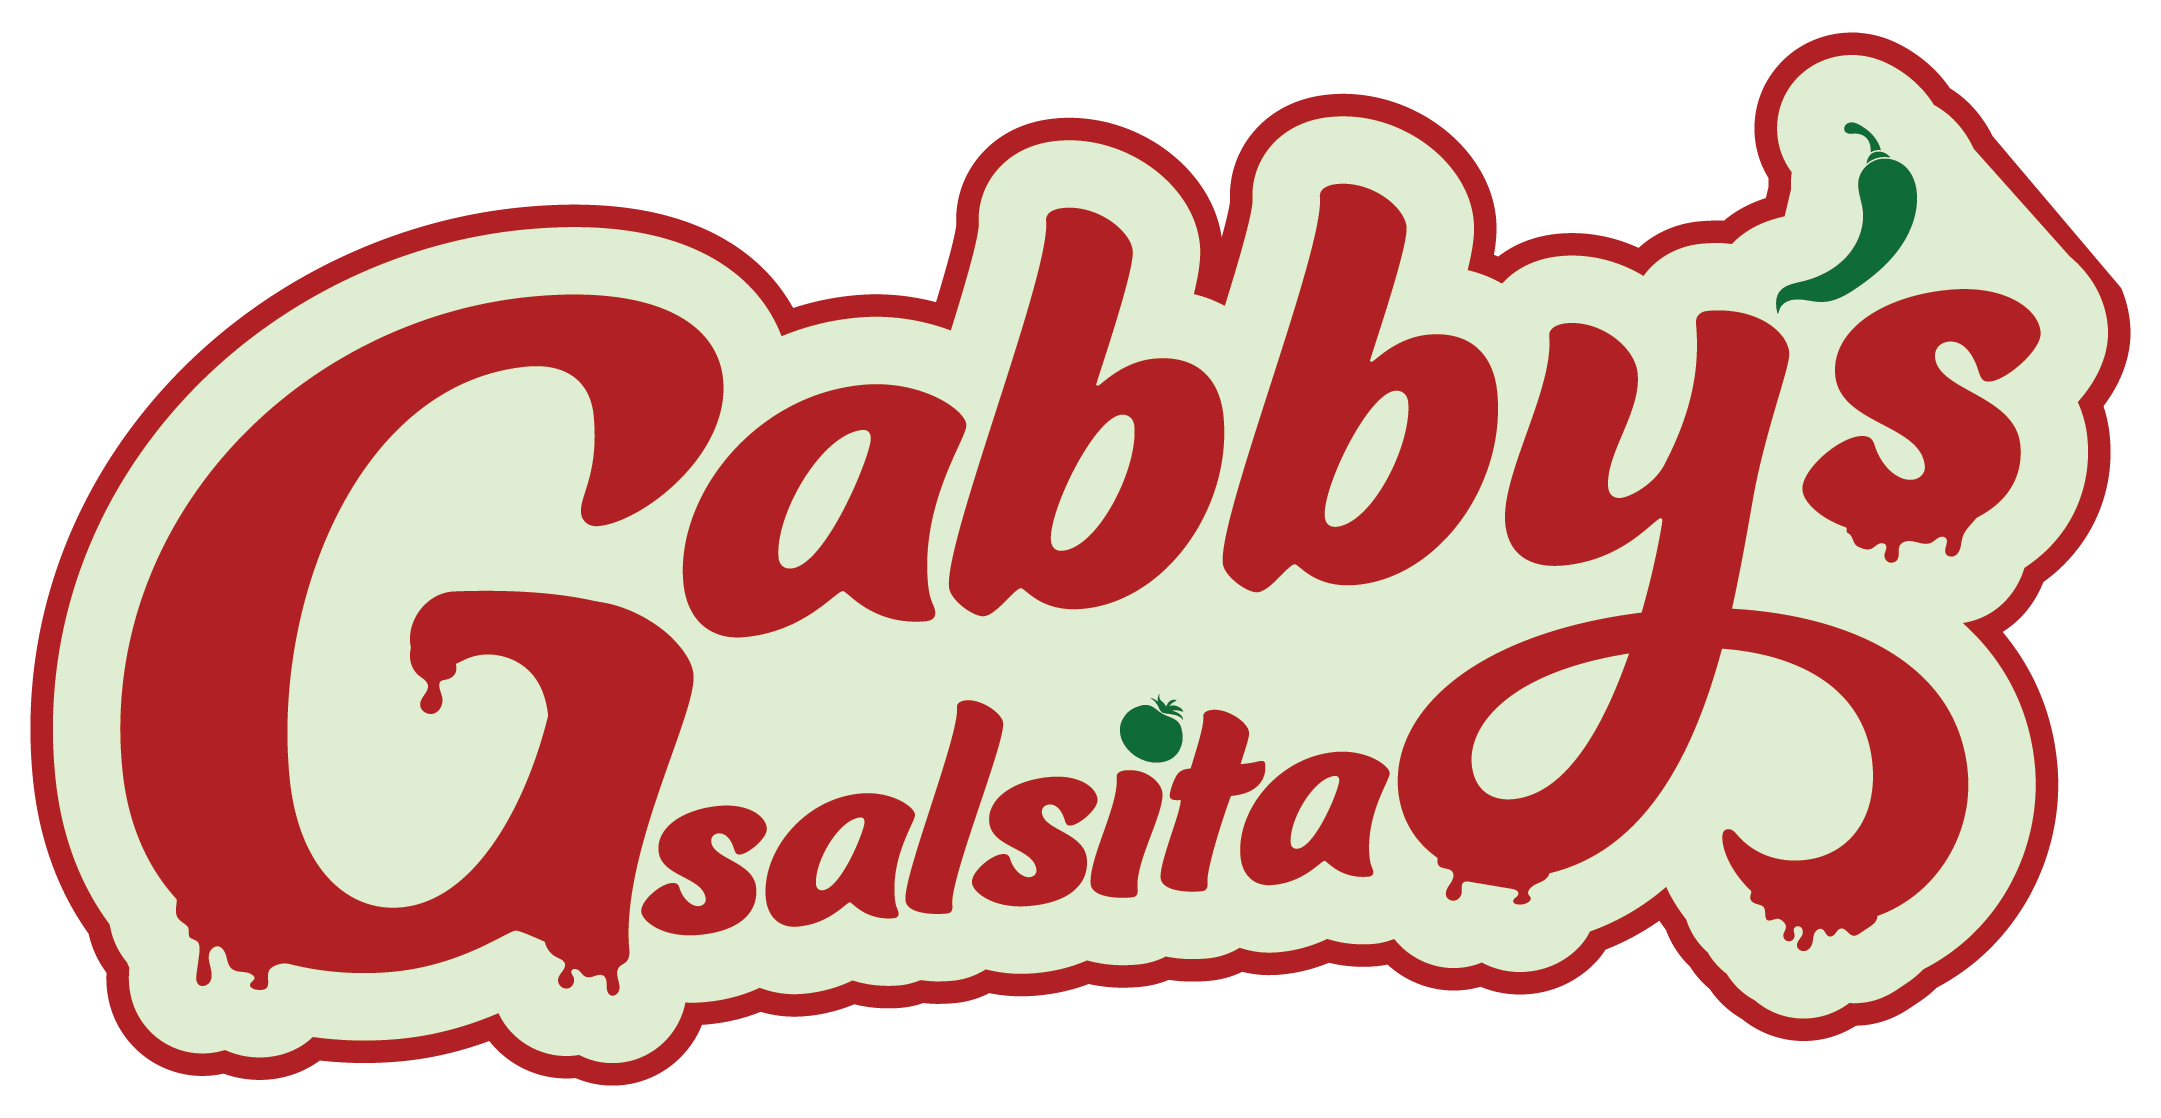 Gabbys Salsita